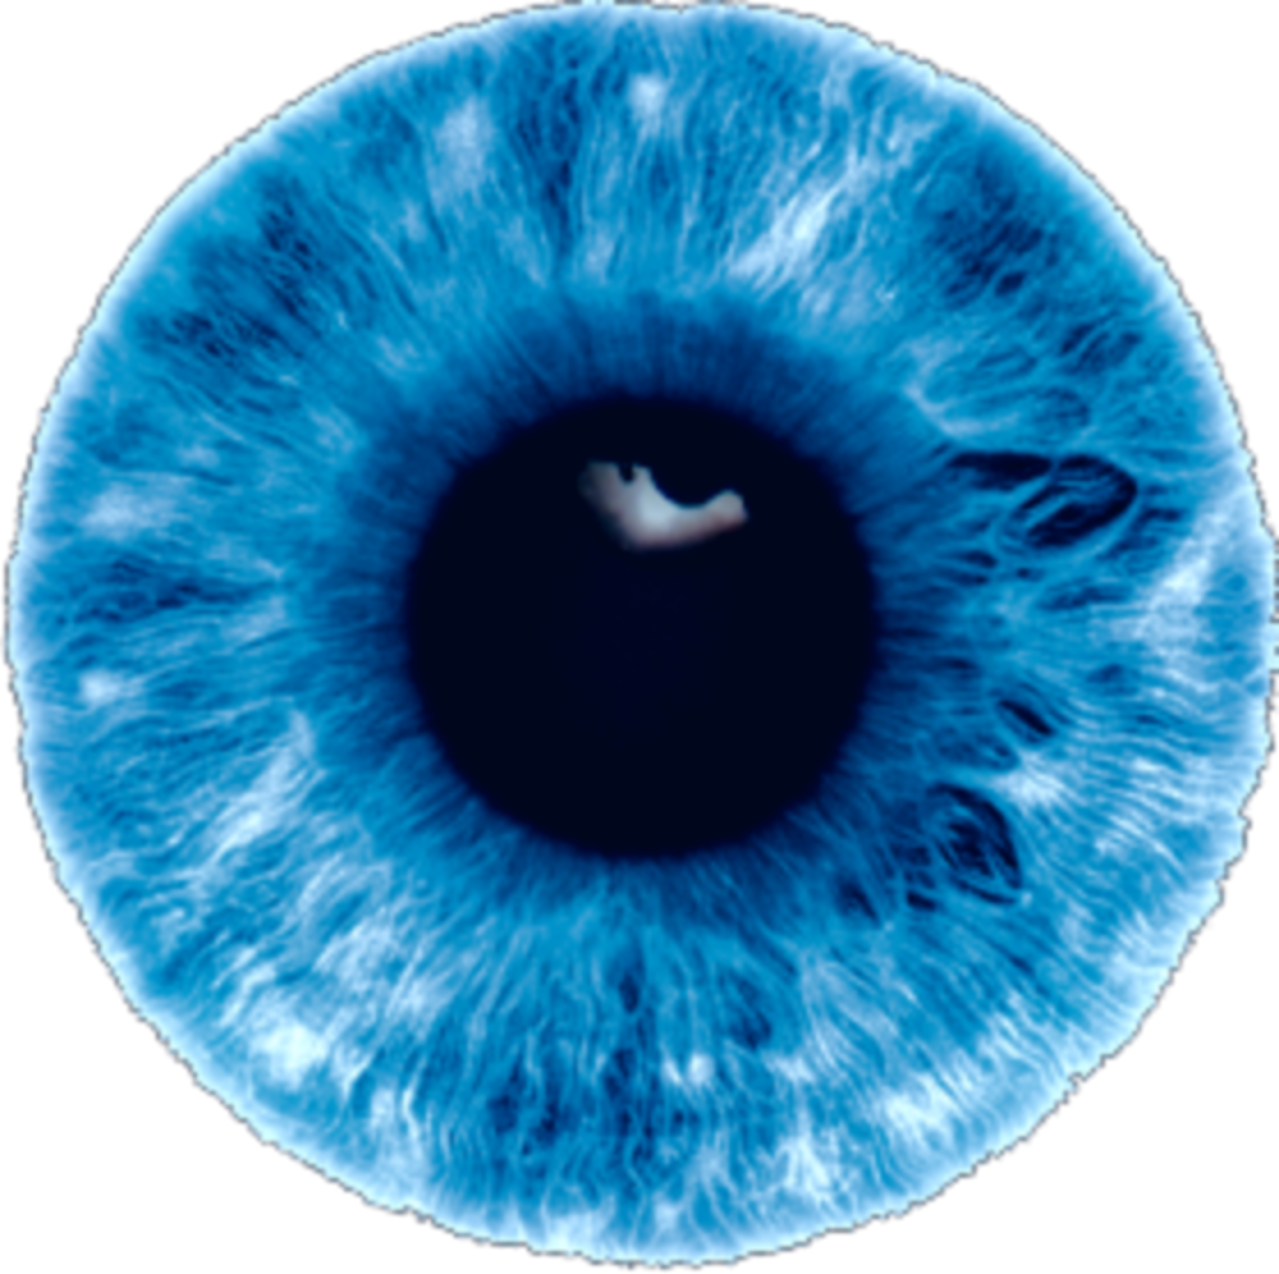 Blue Eye PNG Isolated Image